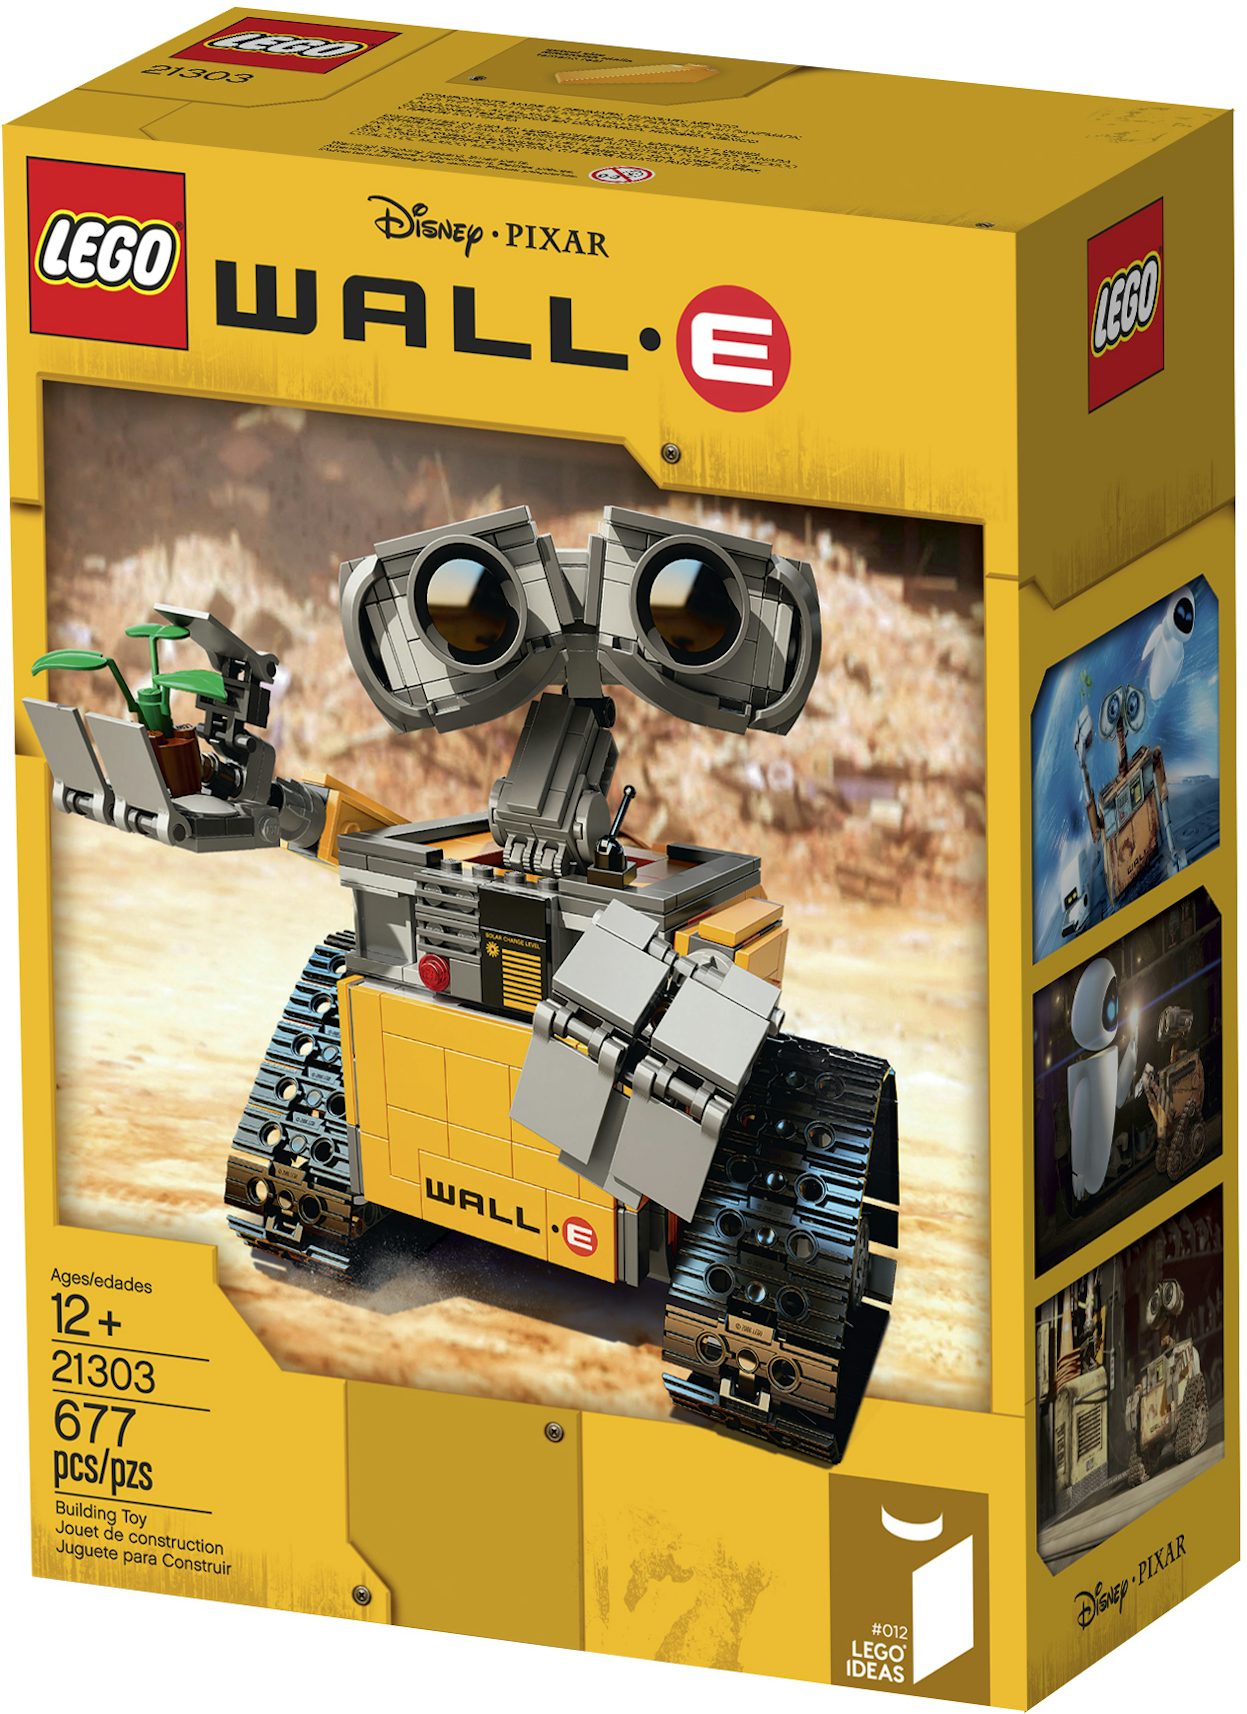 LEGO IDEAS - Wall-e